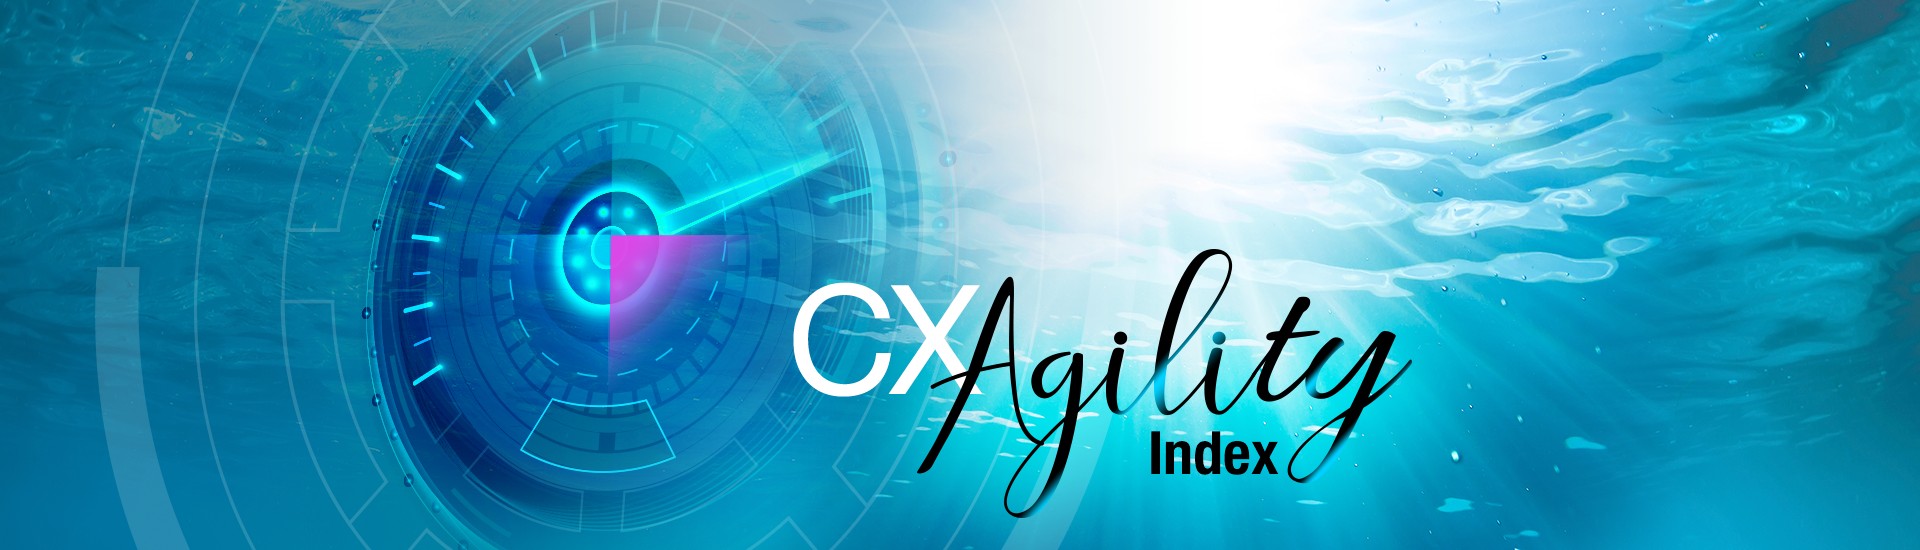 CX Agility Index